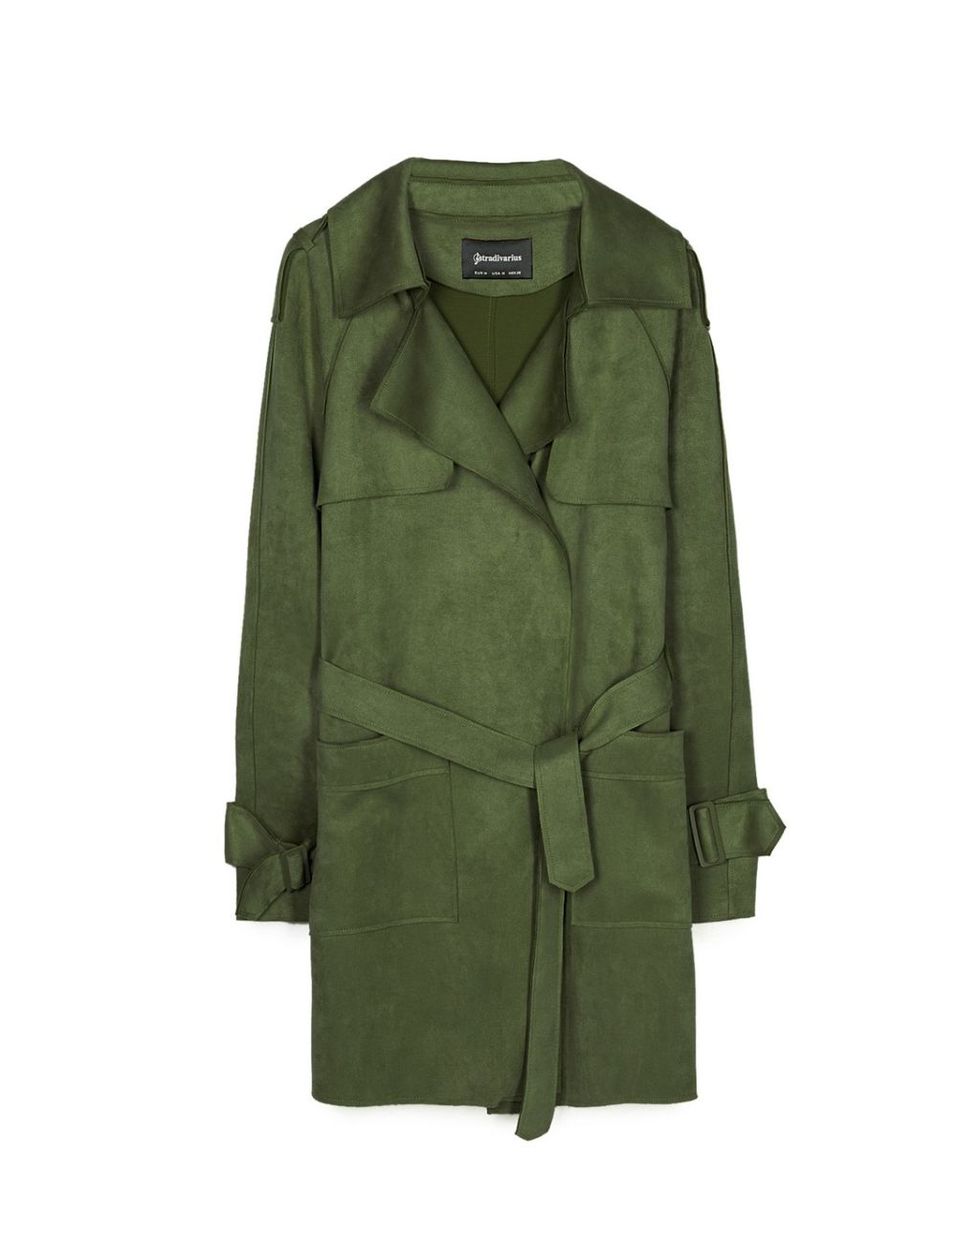 Clothing, Outerwear, Green, Coat, Sleeve, Trench coat, Jacket, Overcoat, Pocket, Collar, 